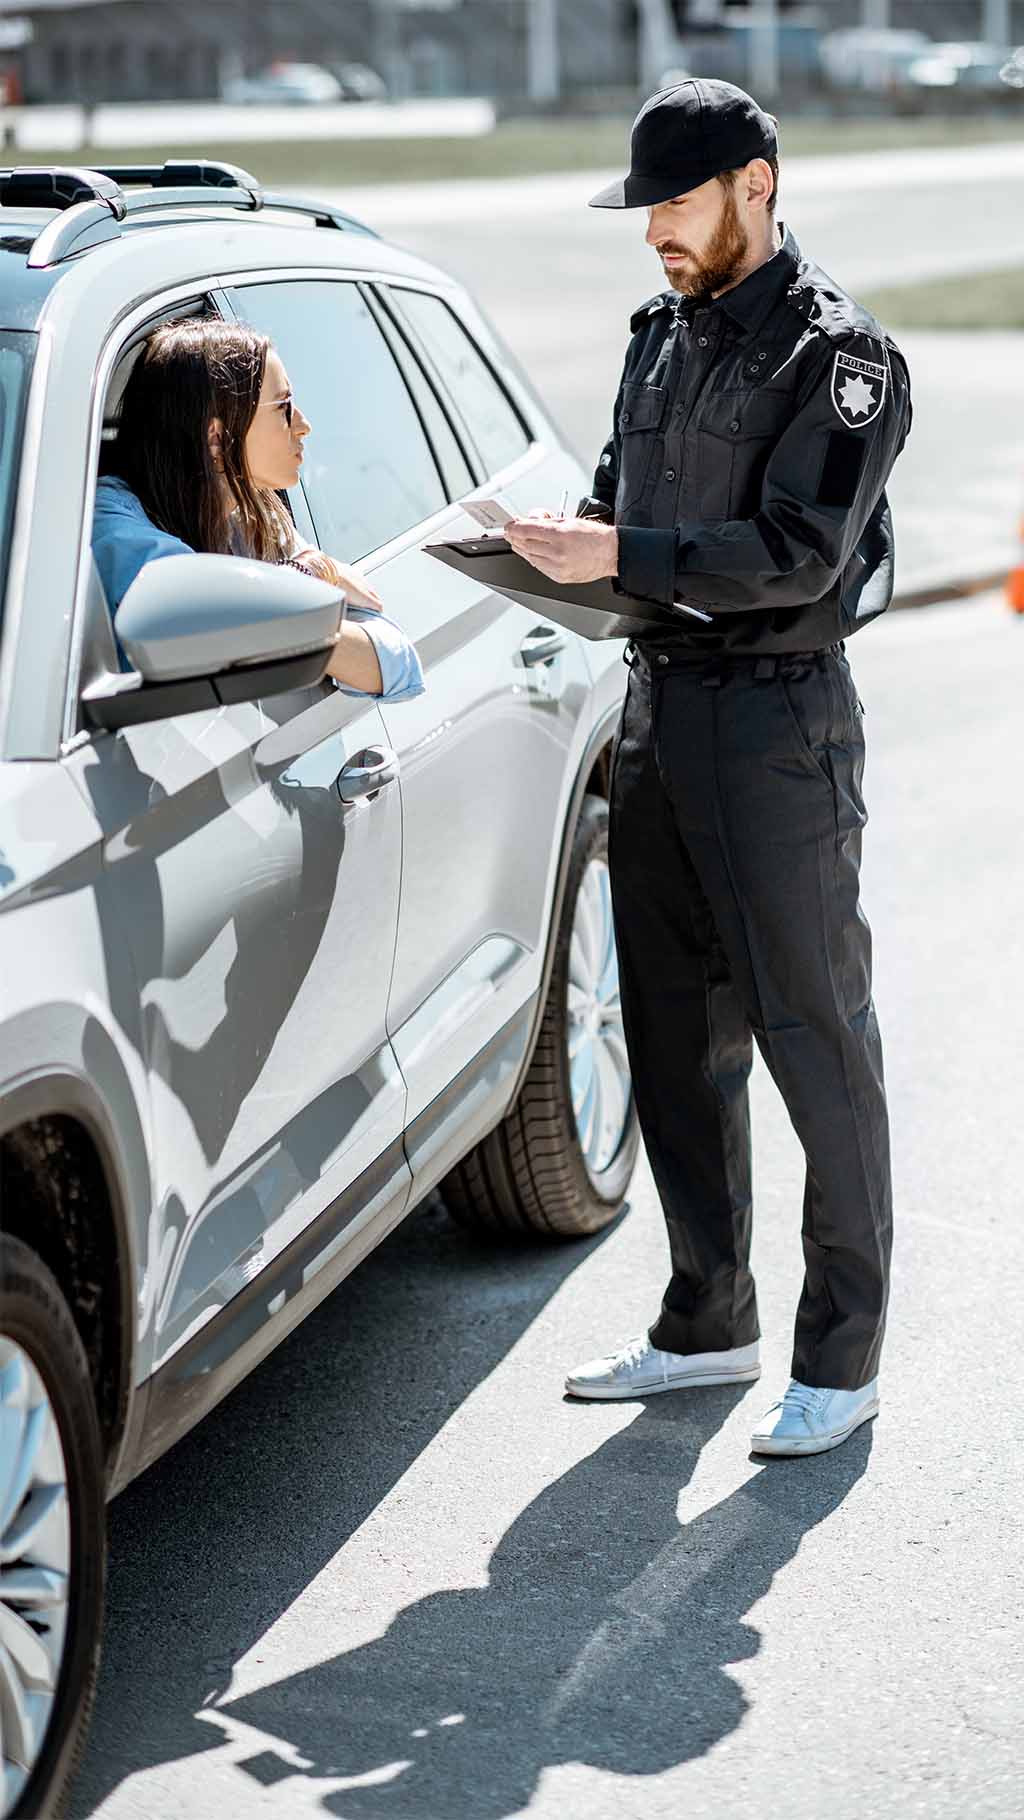 woman receiving a traffic ticket